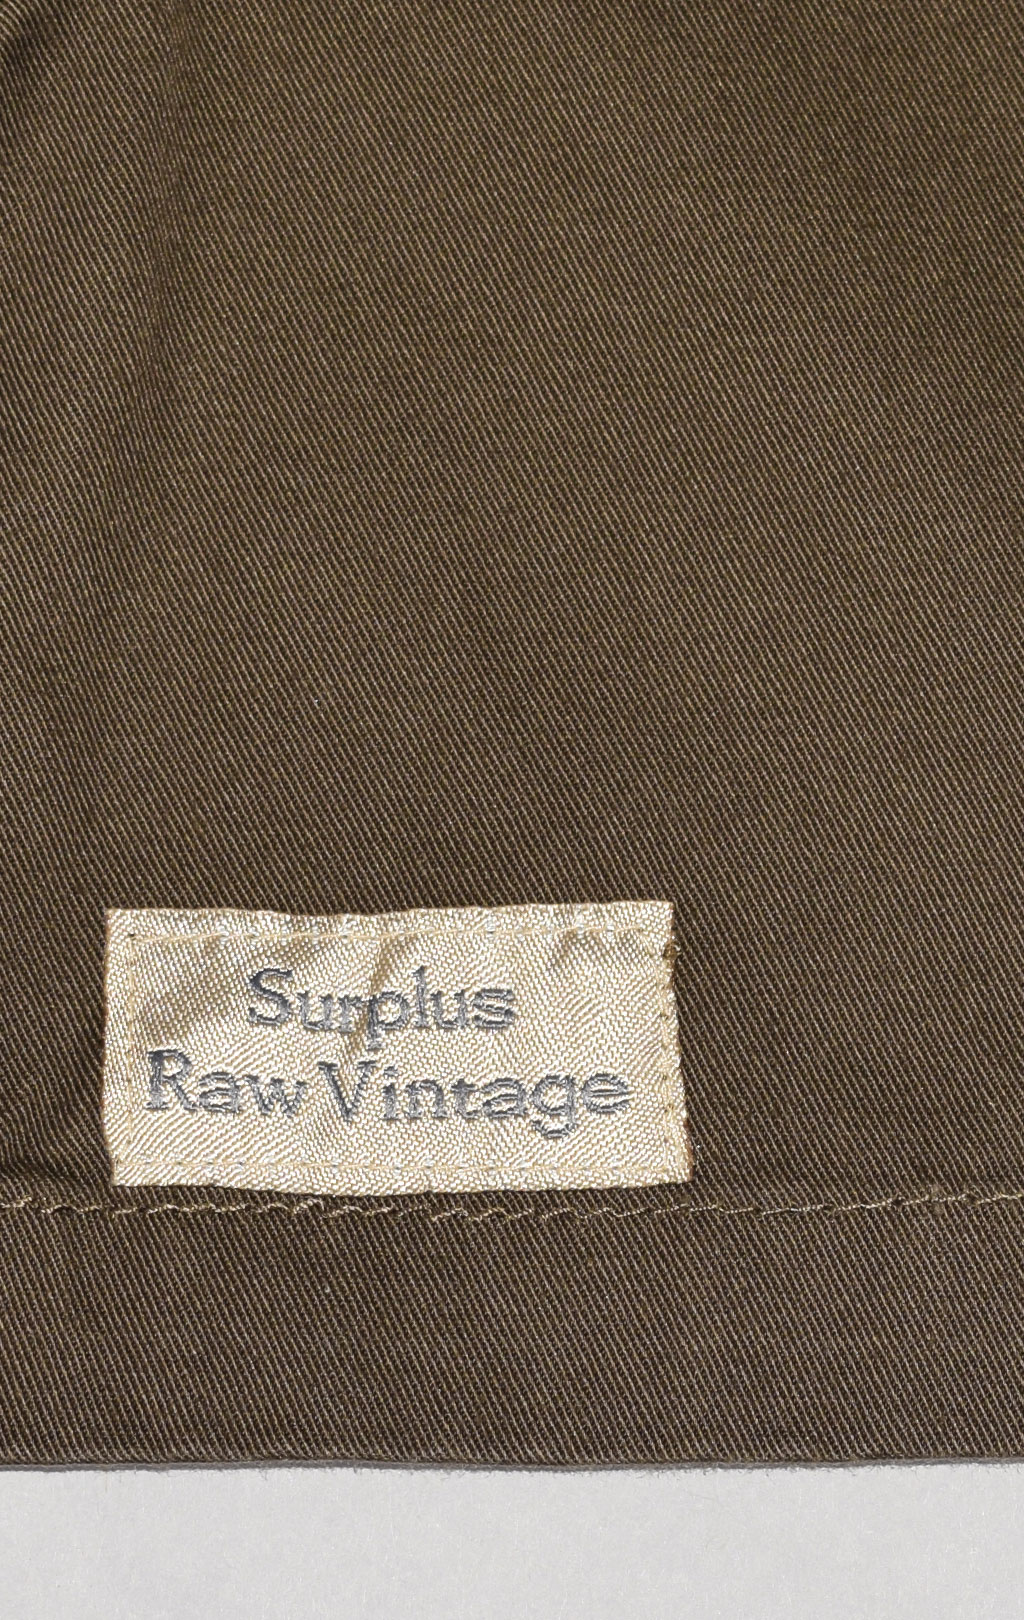 Рубашка Surplus RAW VINTAGE короткий рукав brown 